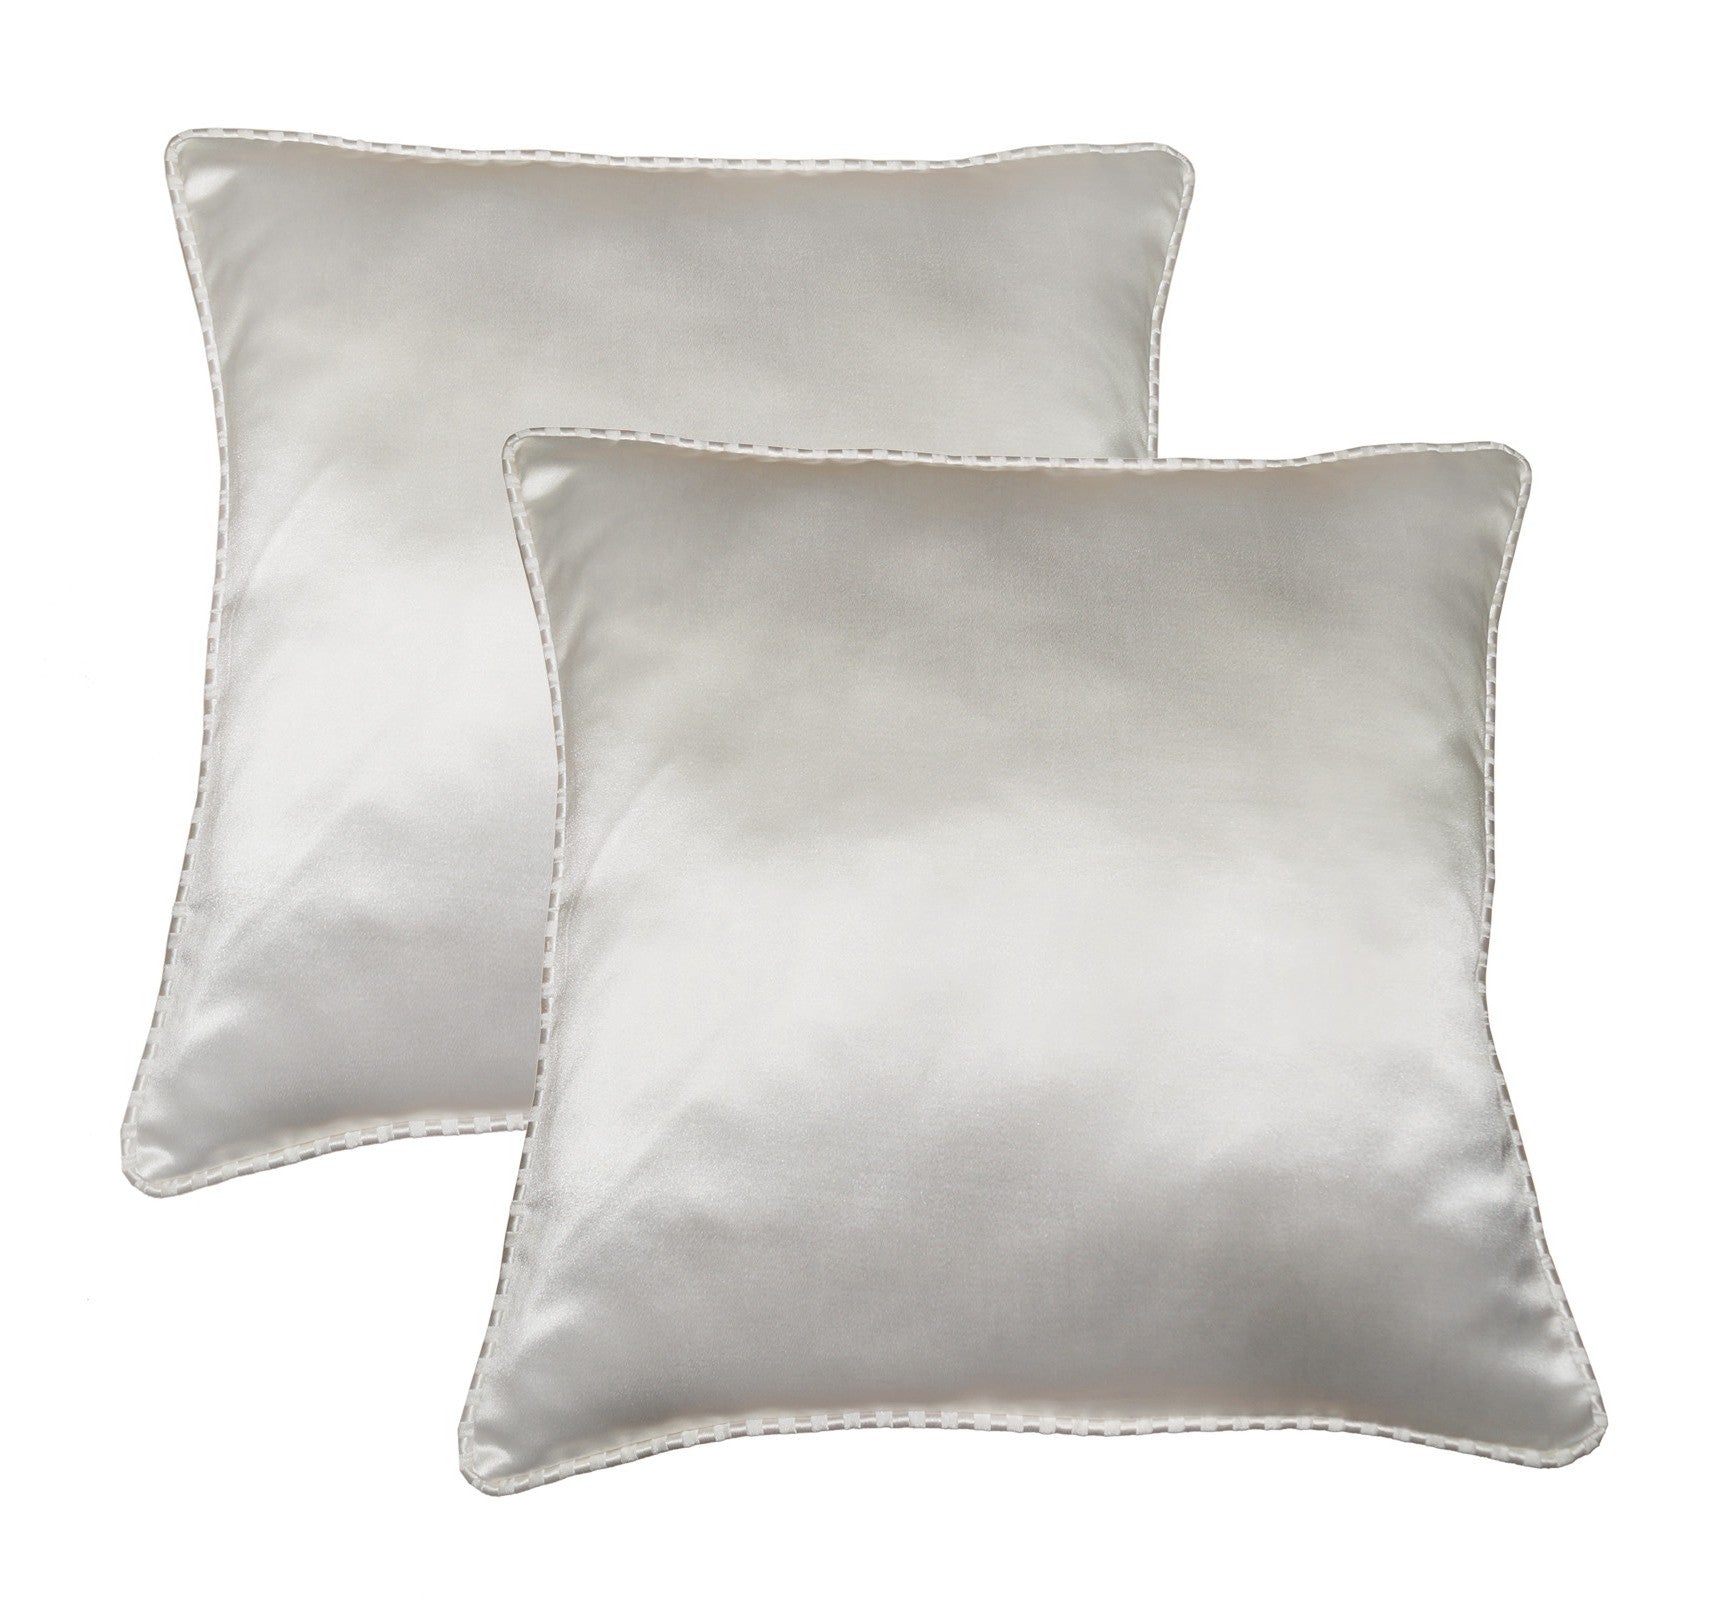 Lushomes cushion cover 16x16, Cream, Sofa Cushion Cover with Striped border, Boho Cushion Cover, cusion covers (16x16 inches, set of 2)